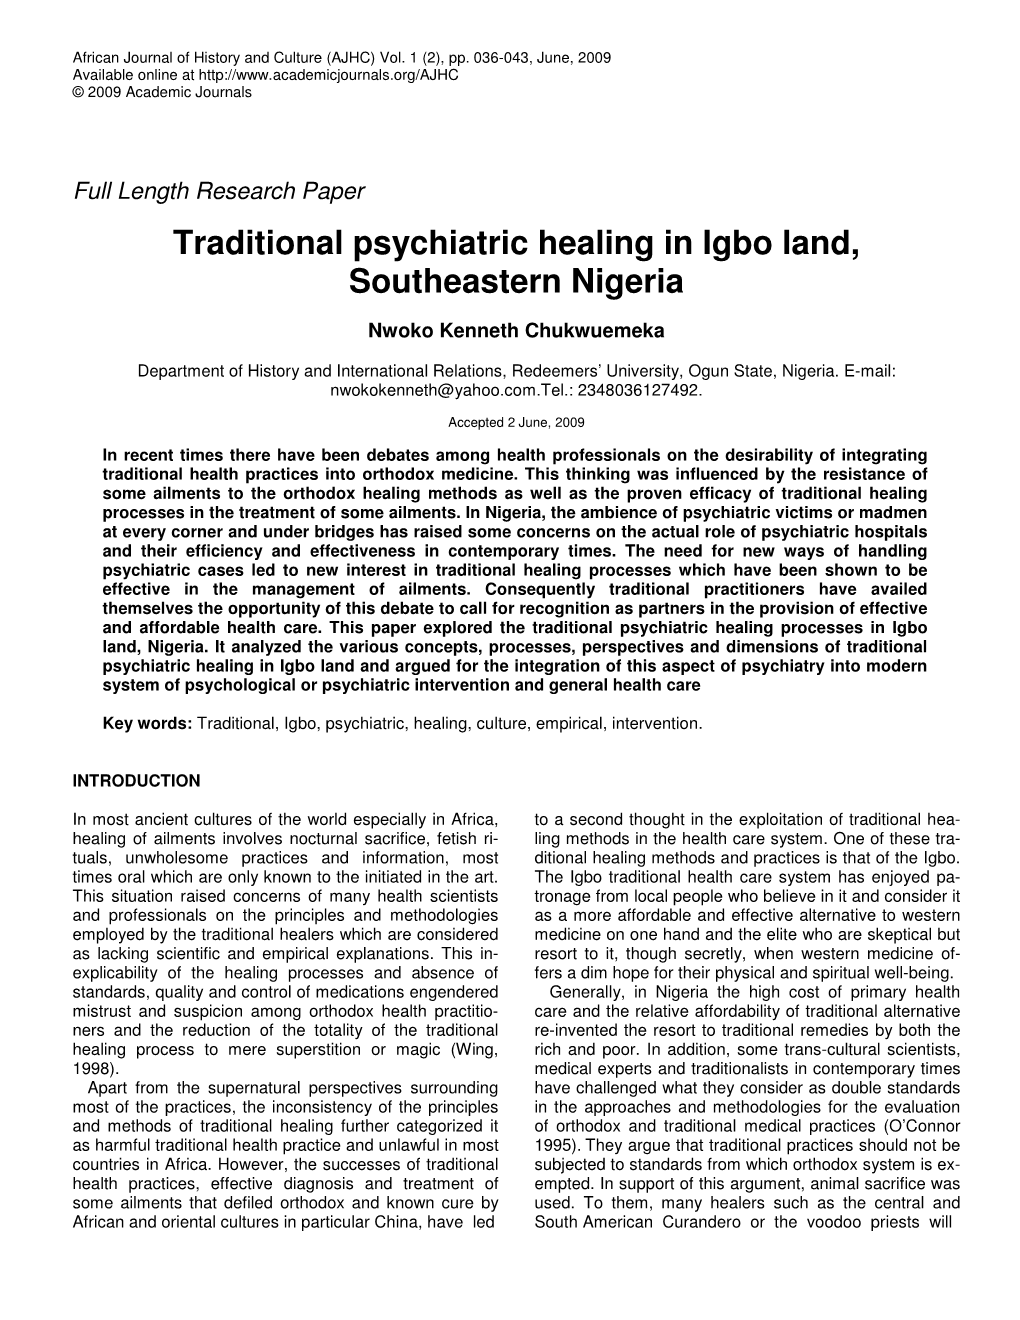 Traditional Psychiatric Healing in Igbo Land, Southeastern Nigeria